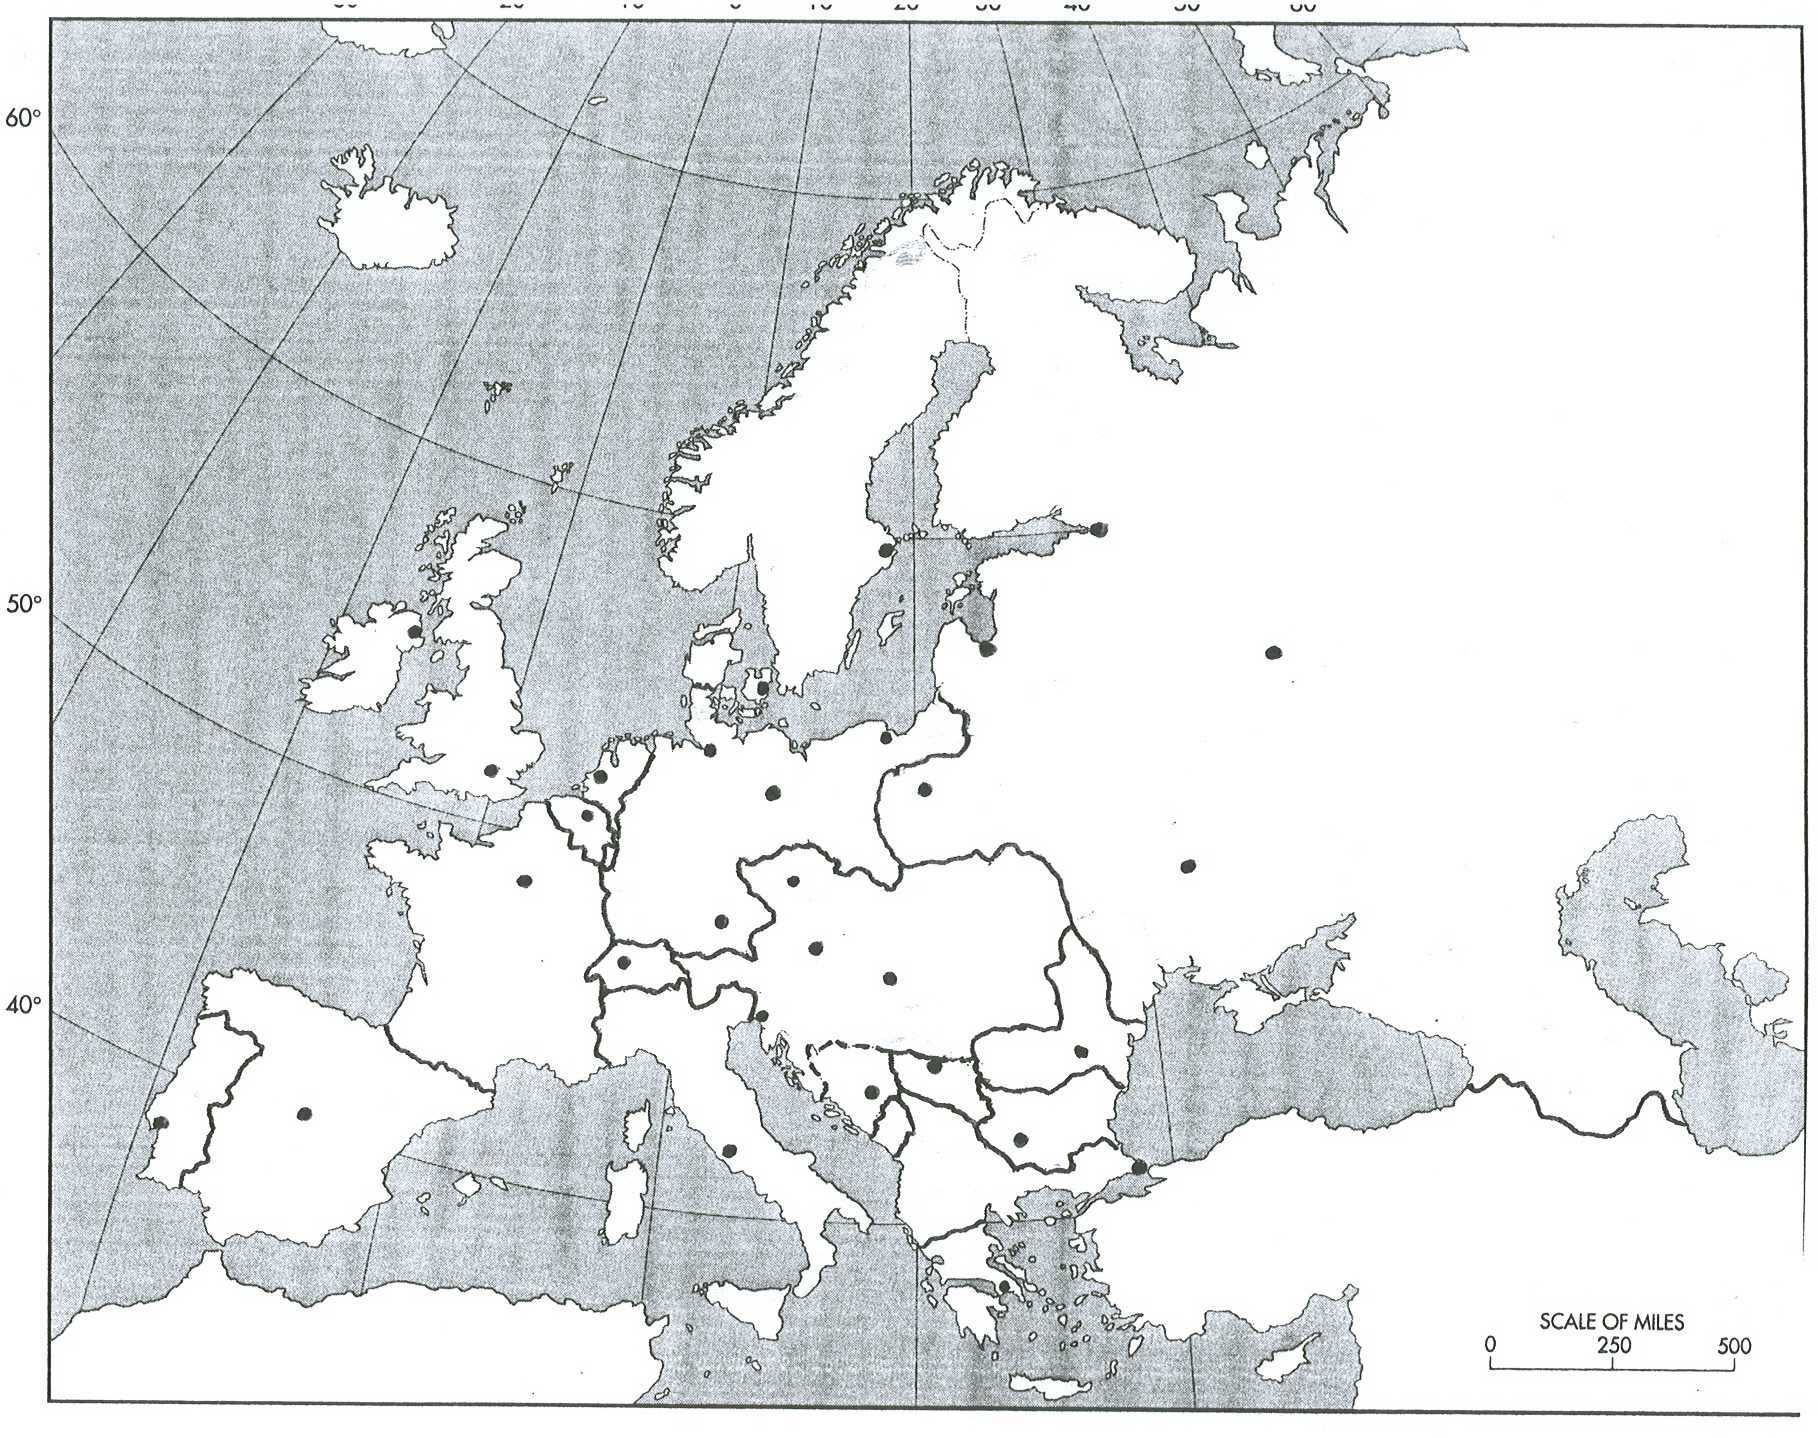 Europe after World War 1 Map Worksheet Answers or World War Ii Blank Map Of Europe Copy World War 2 Map Europe